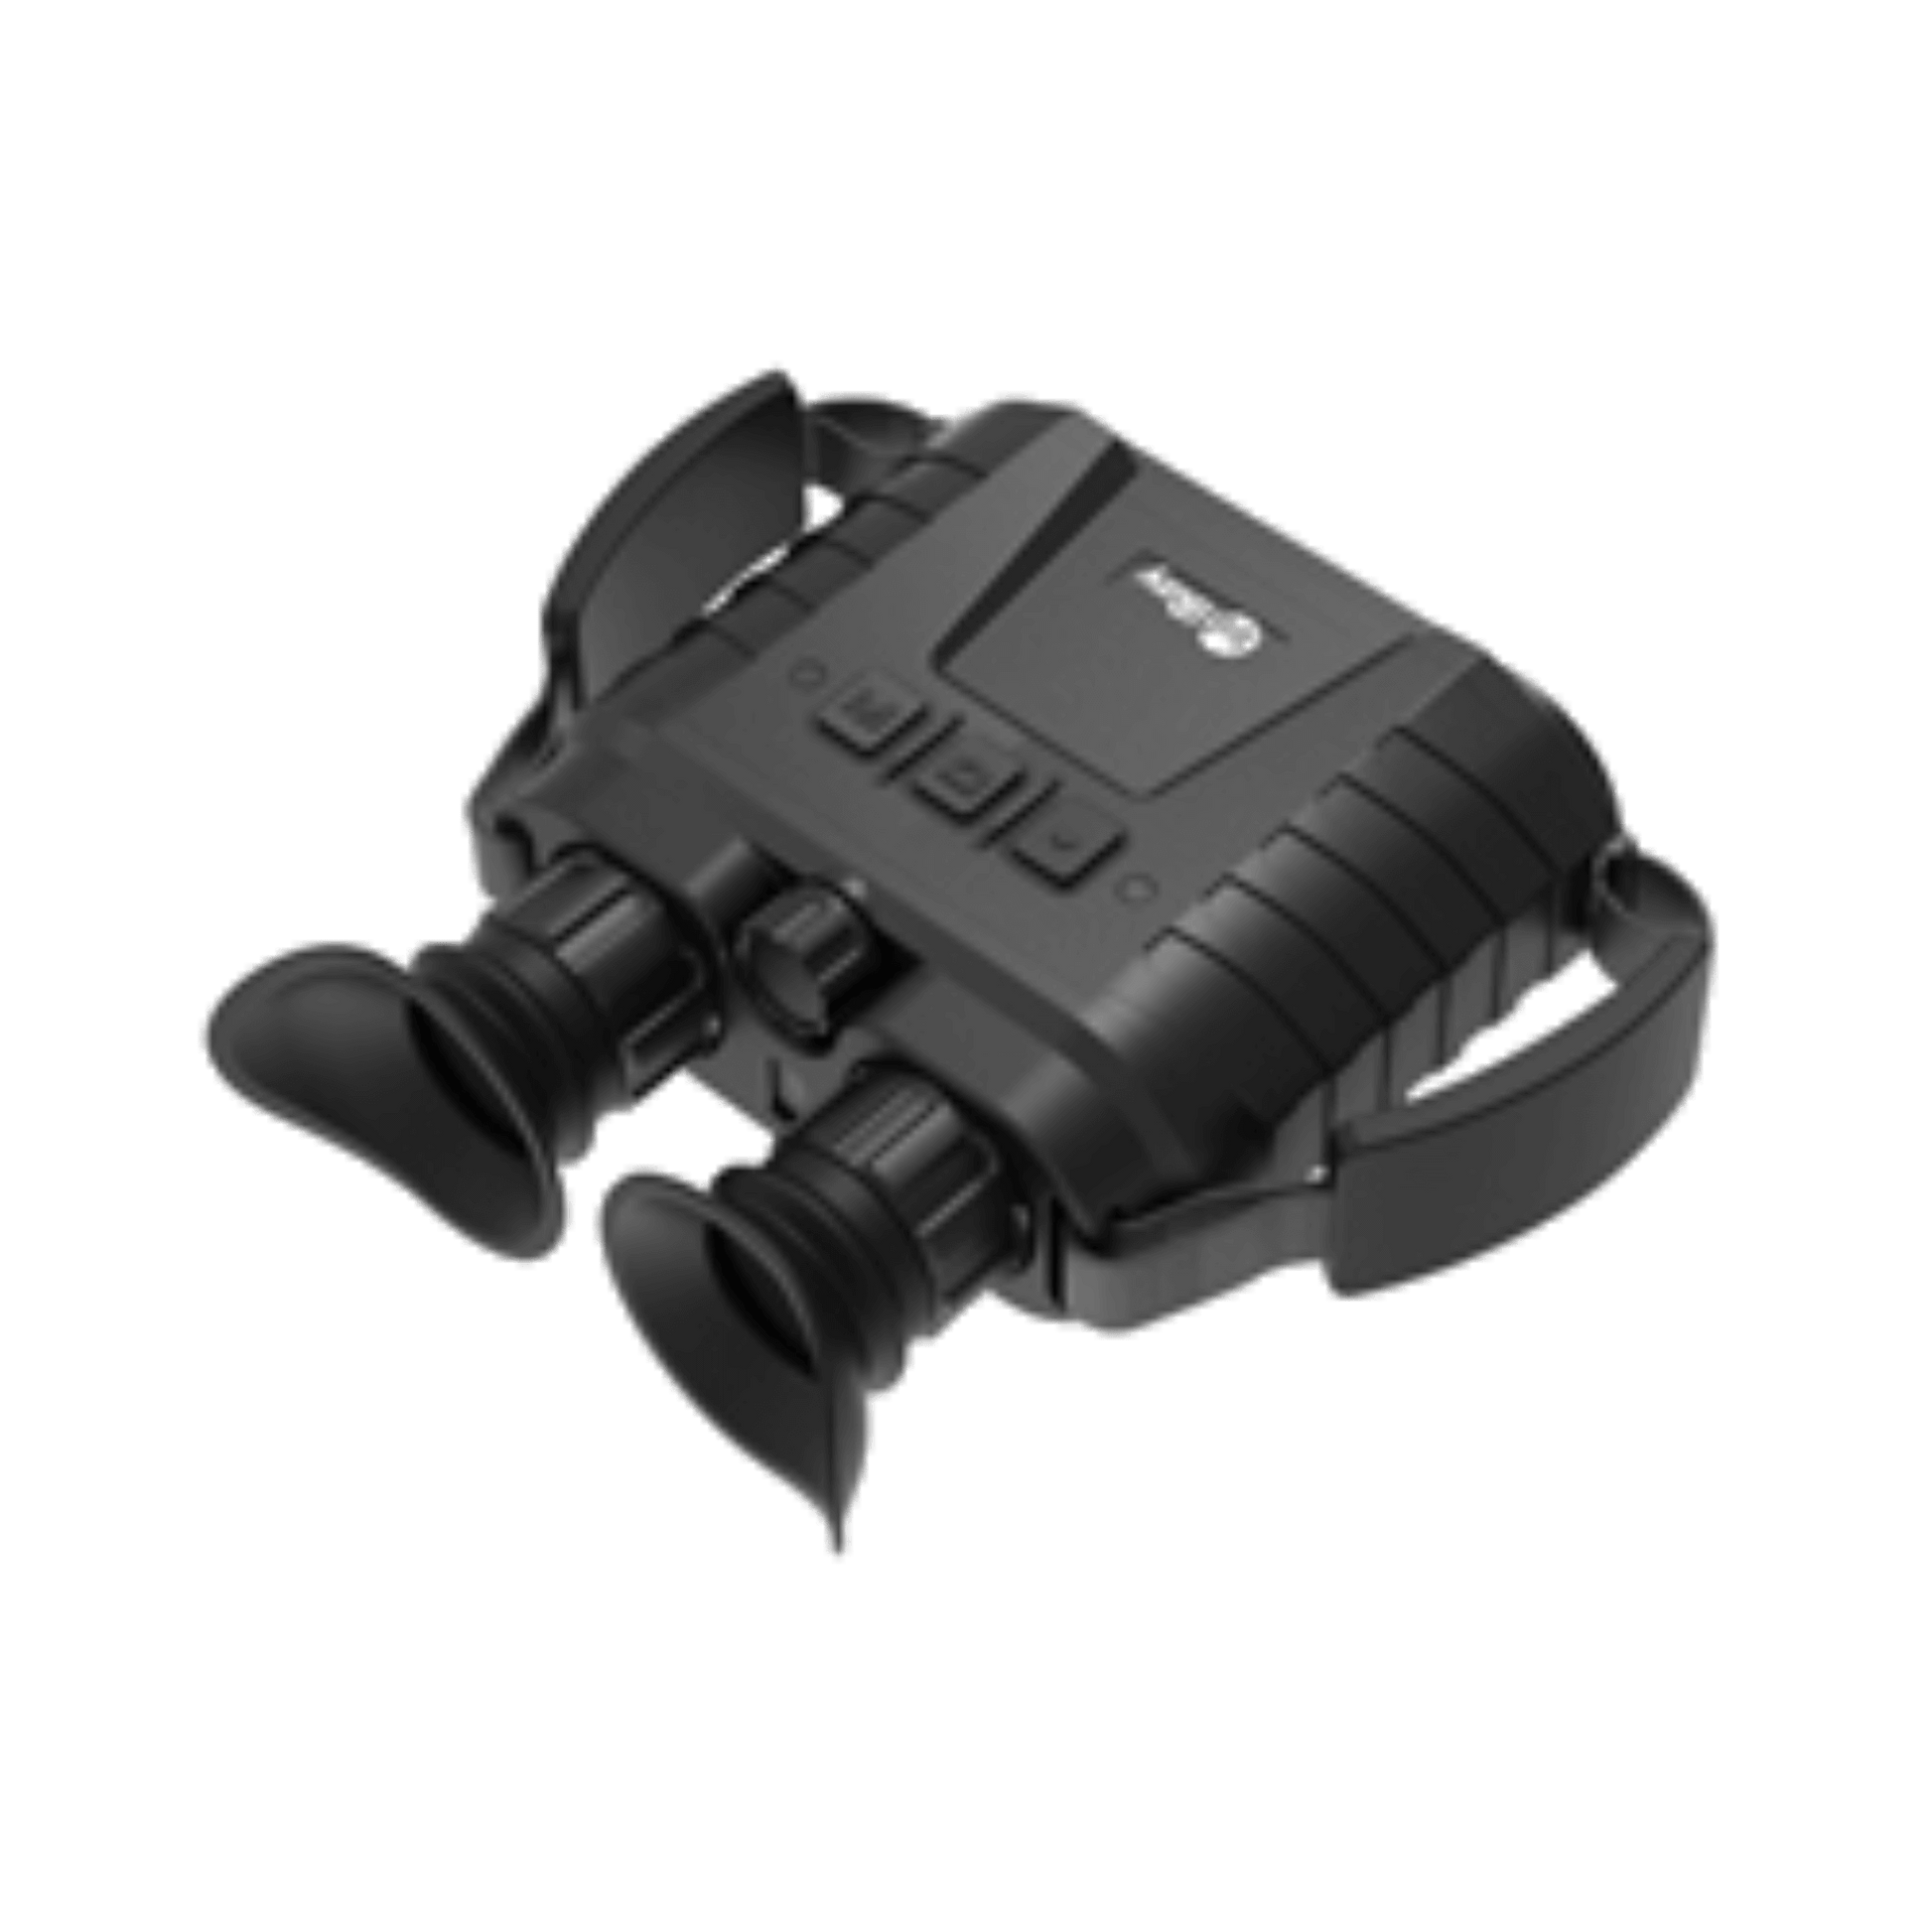 Cape Thermal - The best thermal imaging binoculars for sale - Infiray PF6L Bi-Spectrum thermal imaging Binocular - Rear side view